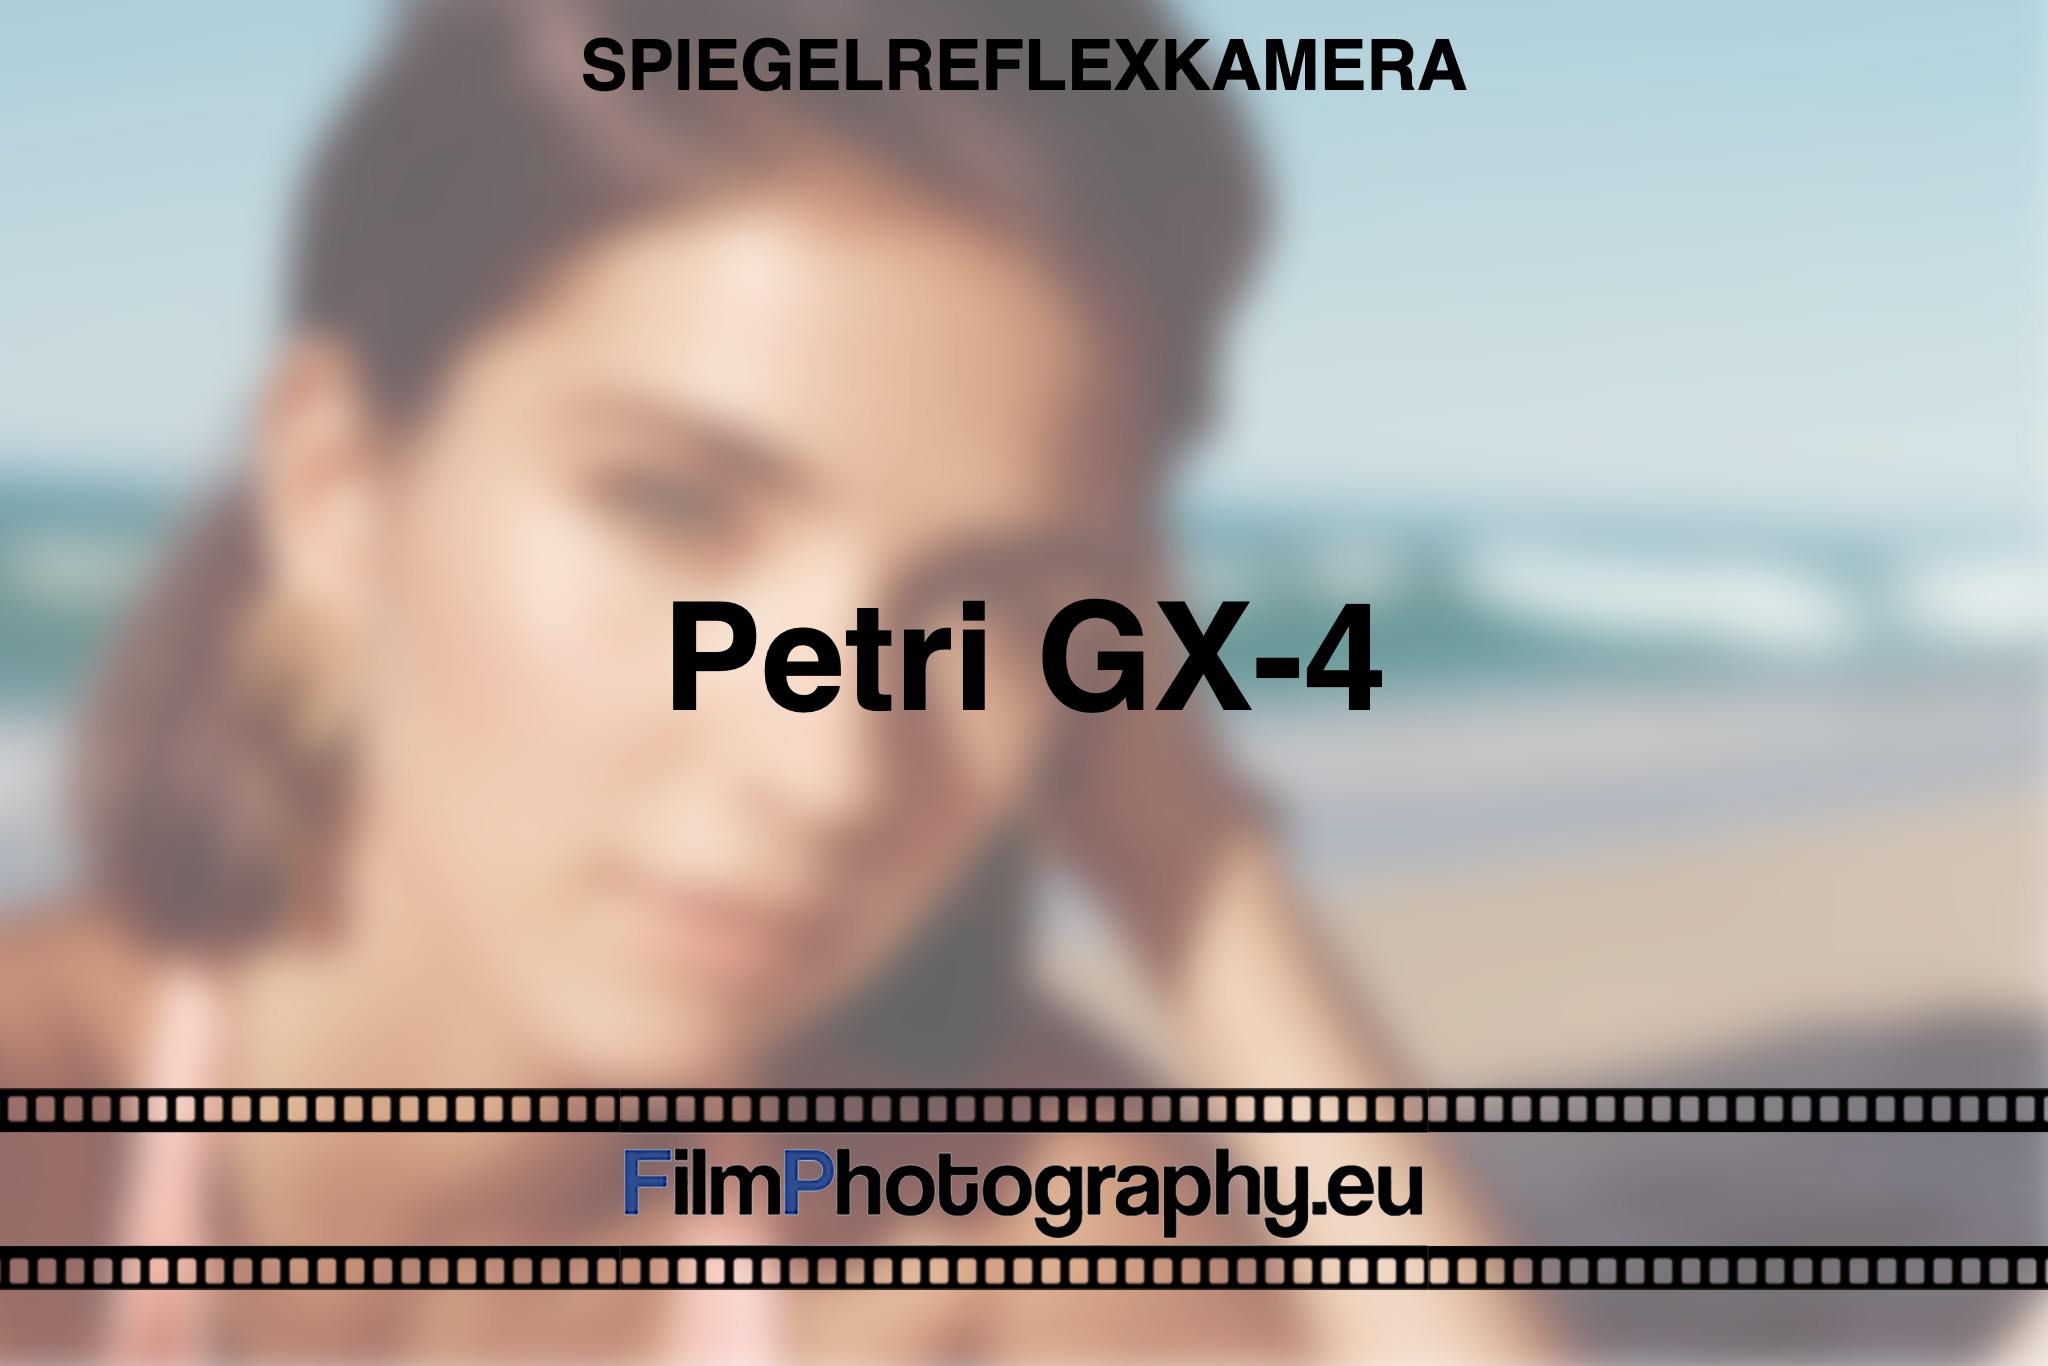 petri-gx-4-spiegelreflexkamera-bnv